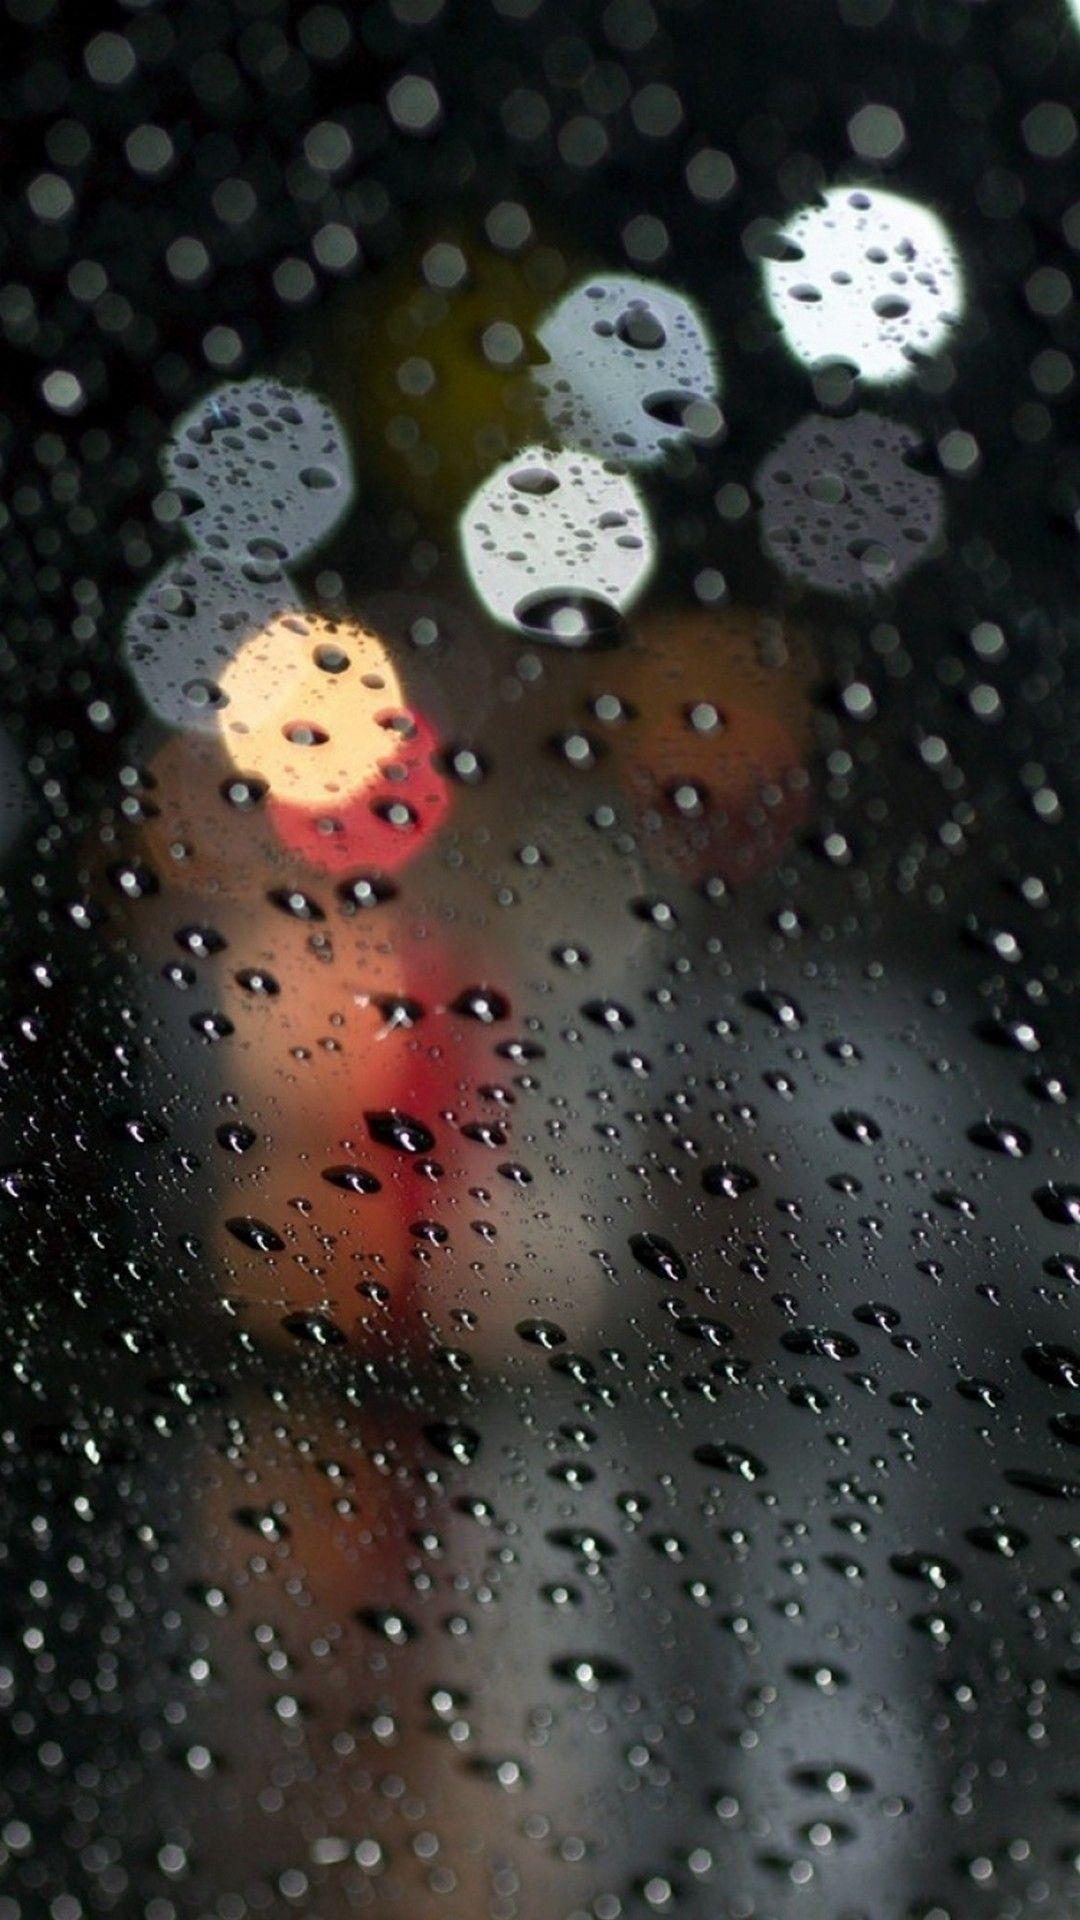 Download wallpaper 1280x2120 raindrops on glass rain night of city  bokeh iphone 6 plus 1280x2120 hd background 29238